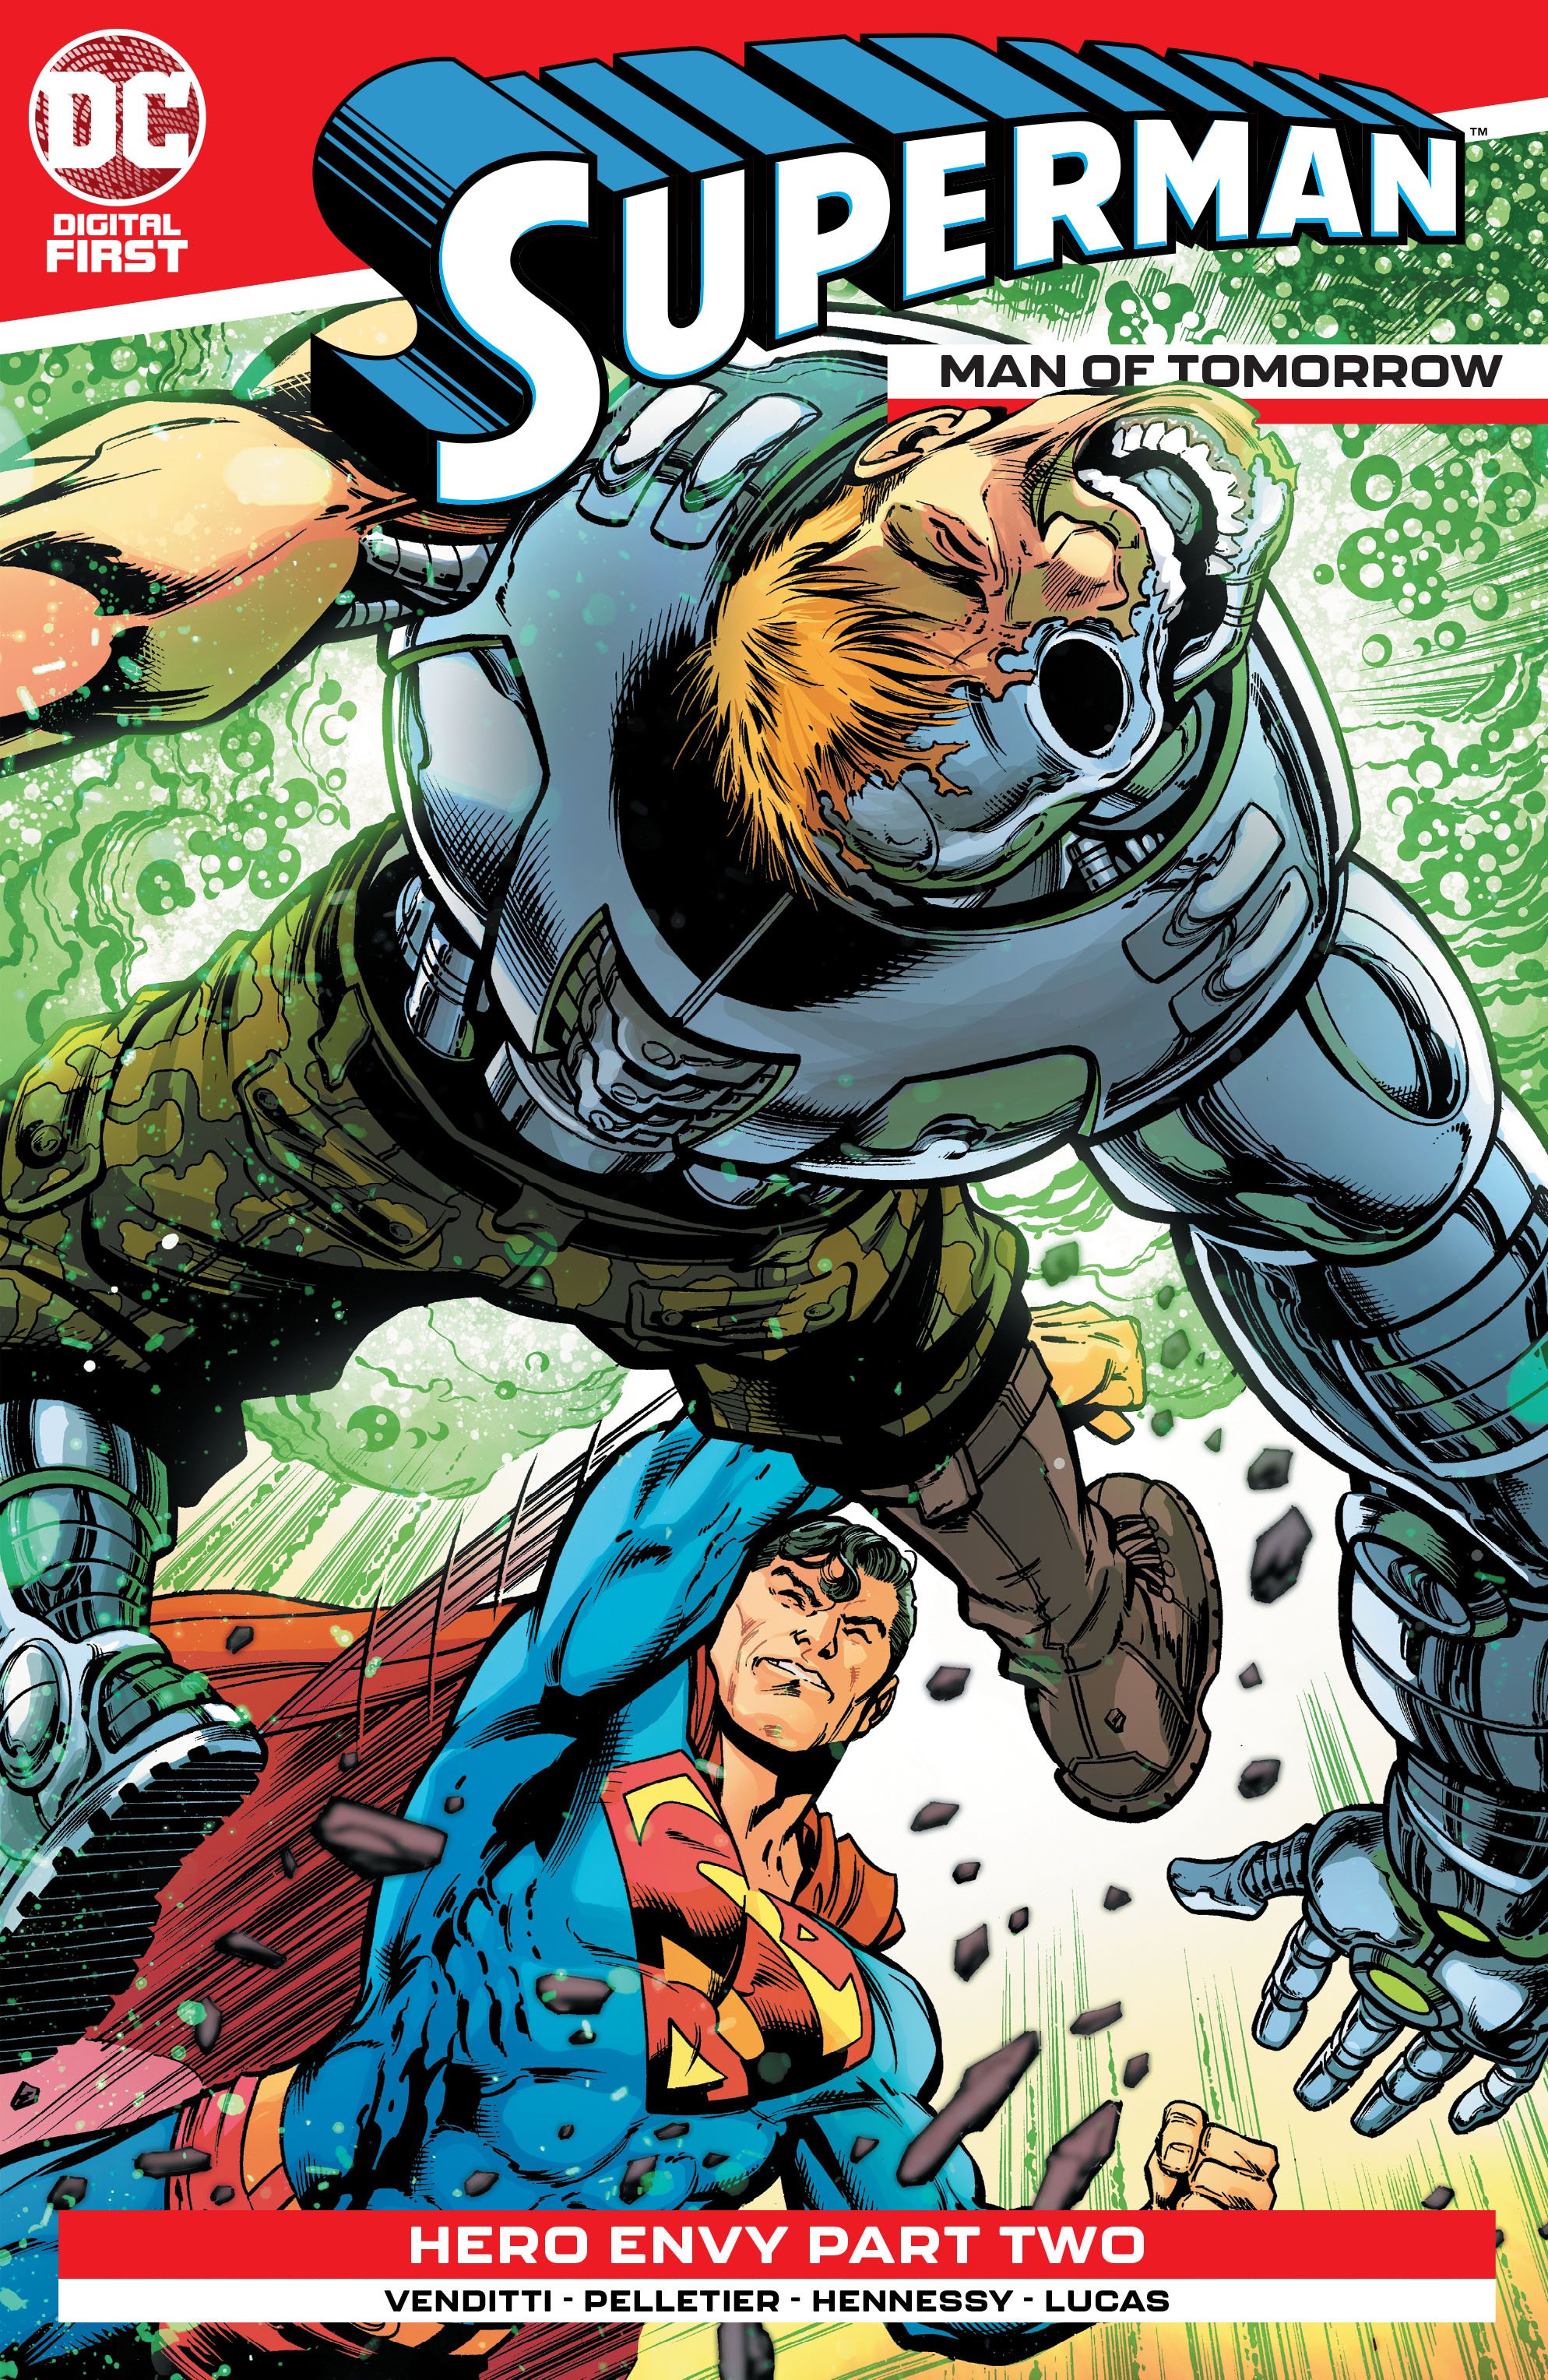 Superman: Man of Tomorrow #15 Review